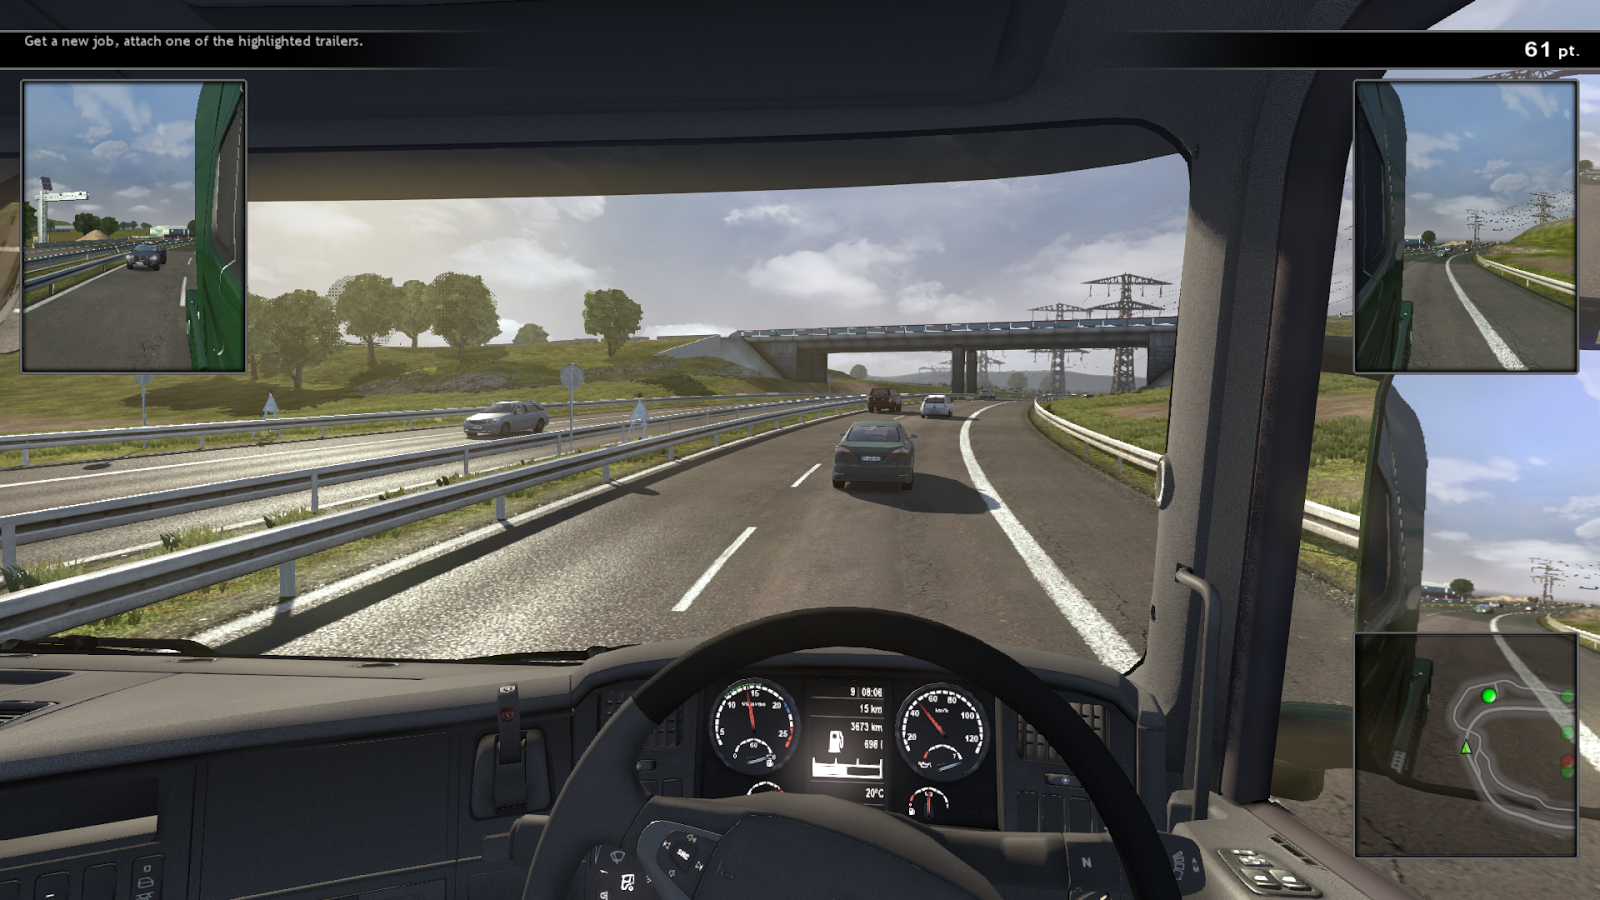 extream driving simulator games pc